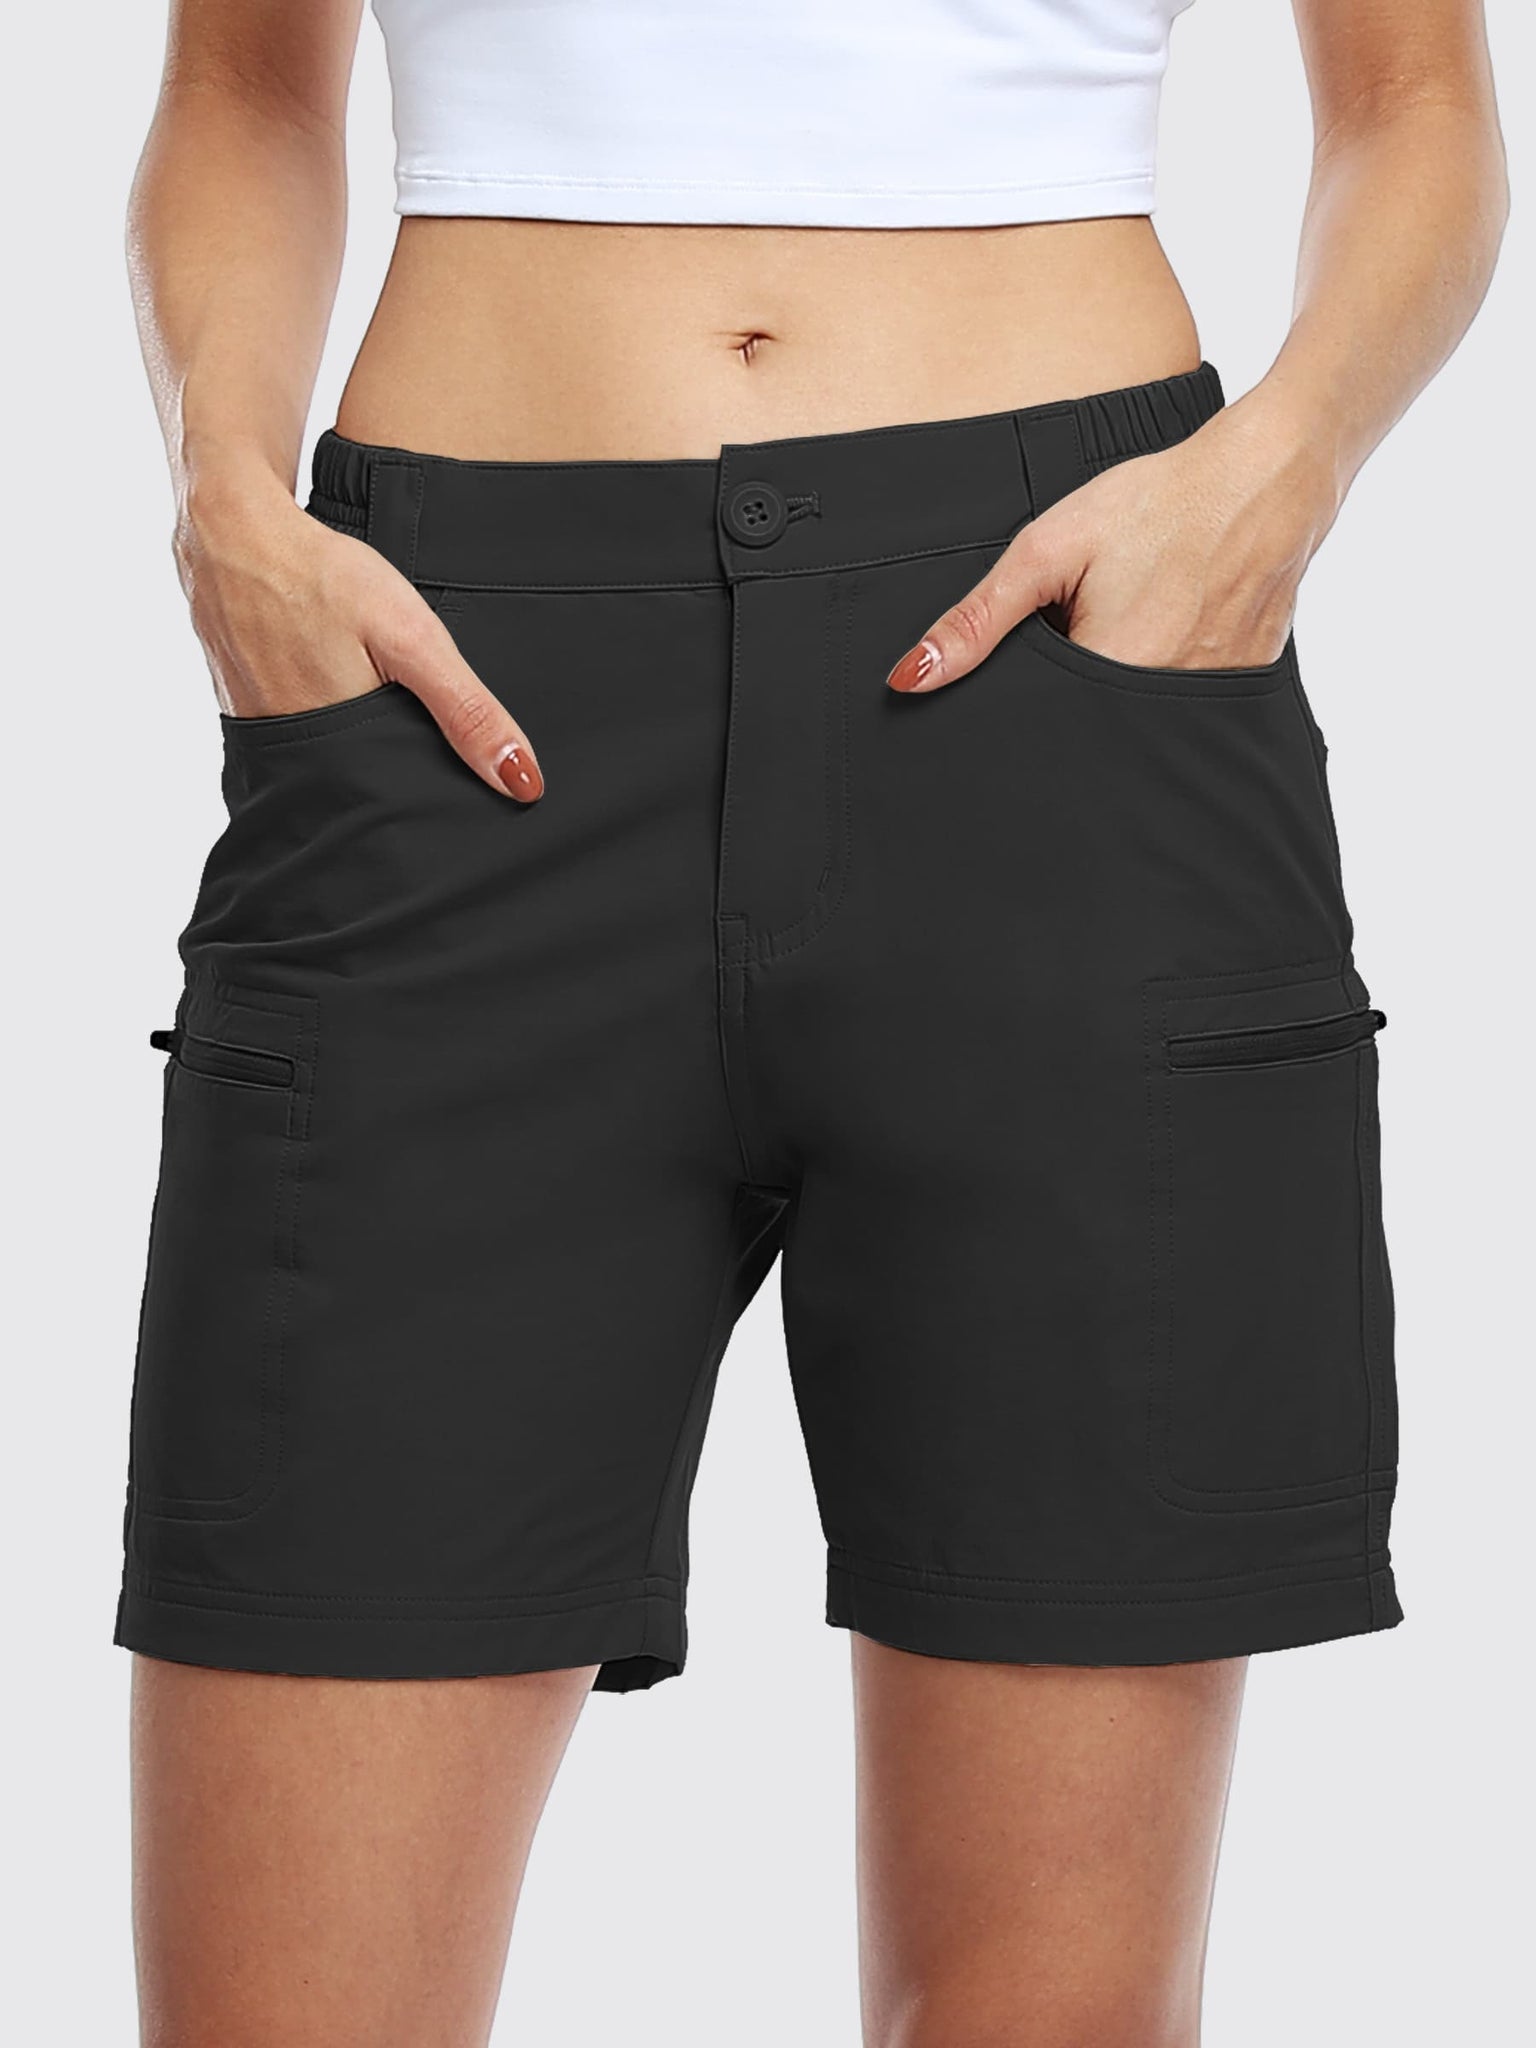 Willit Women's Outdoor Cargo Shorts 6 Inseam_Black_model1